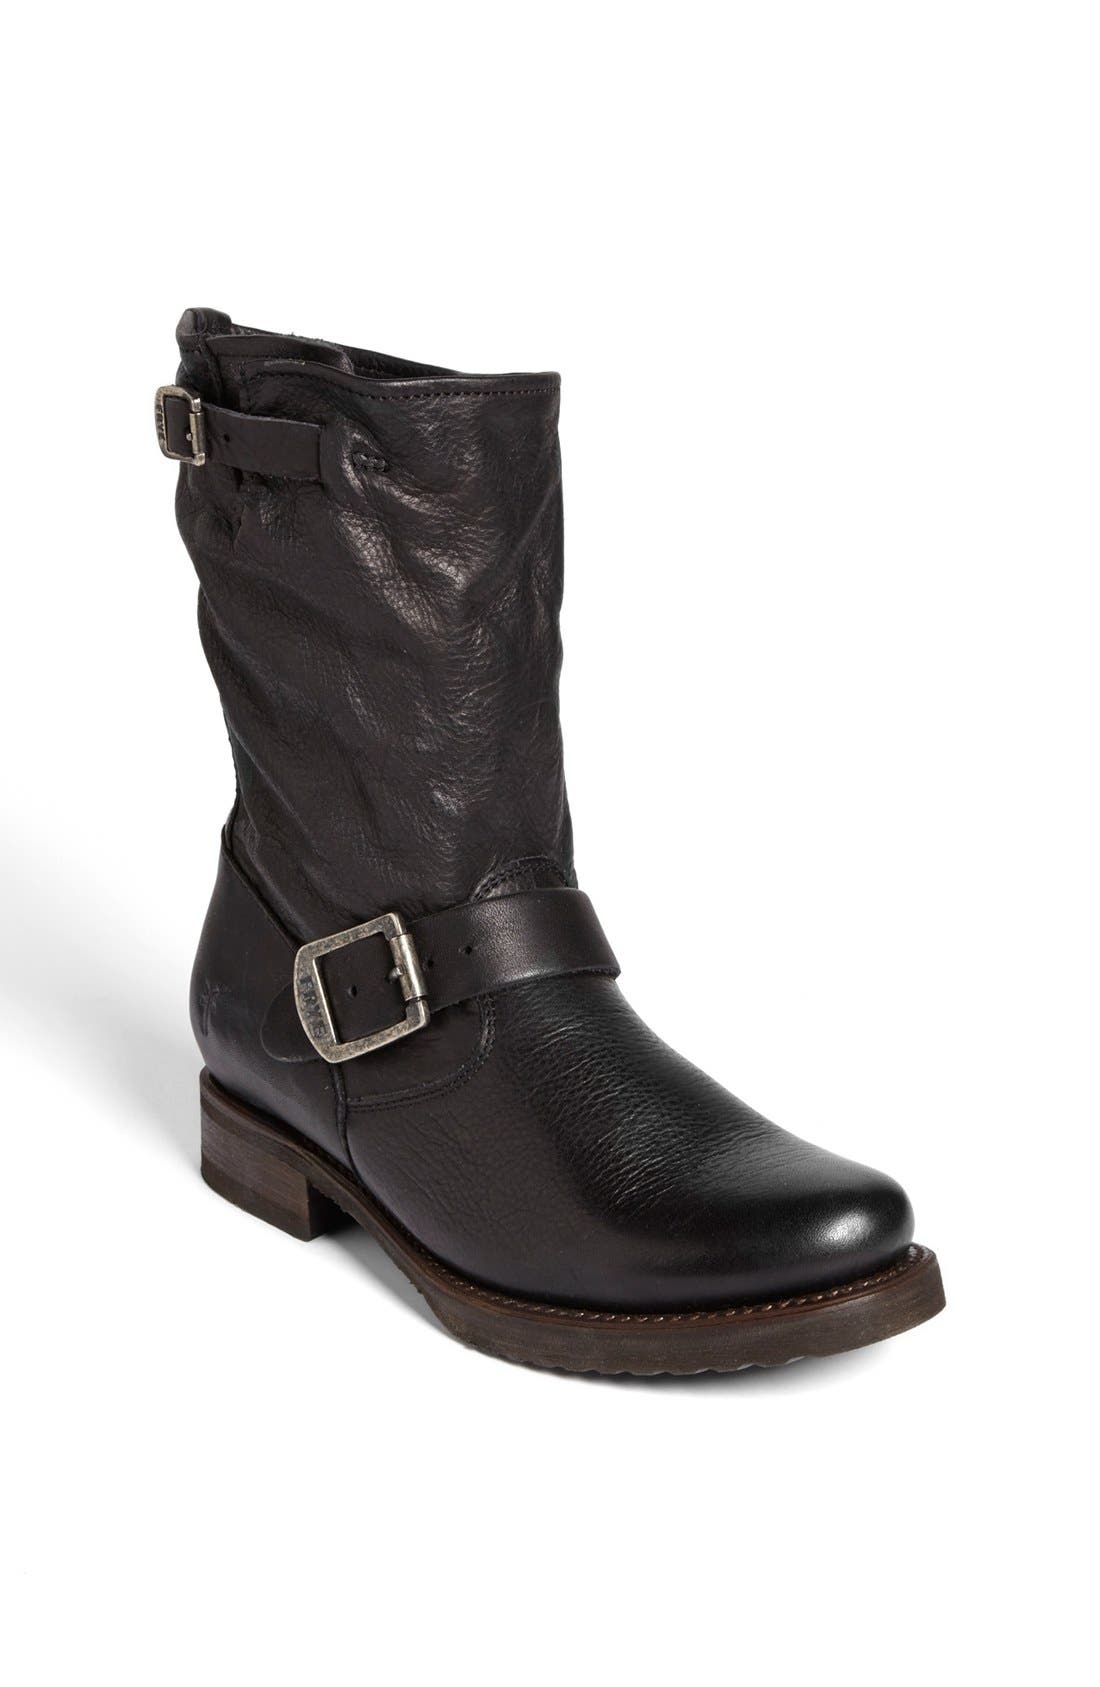 frye women's mid calf boots